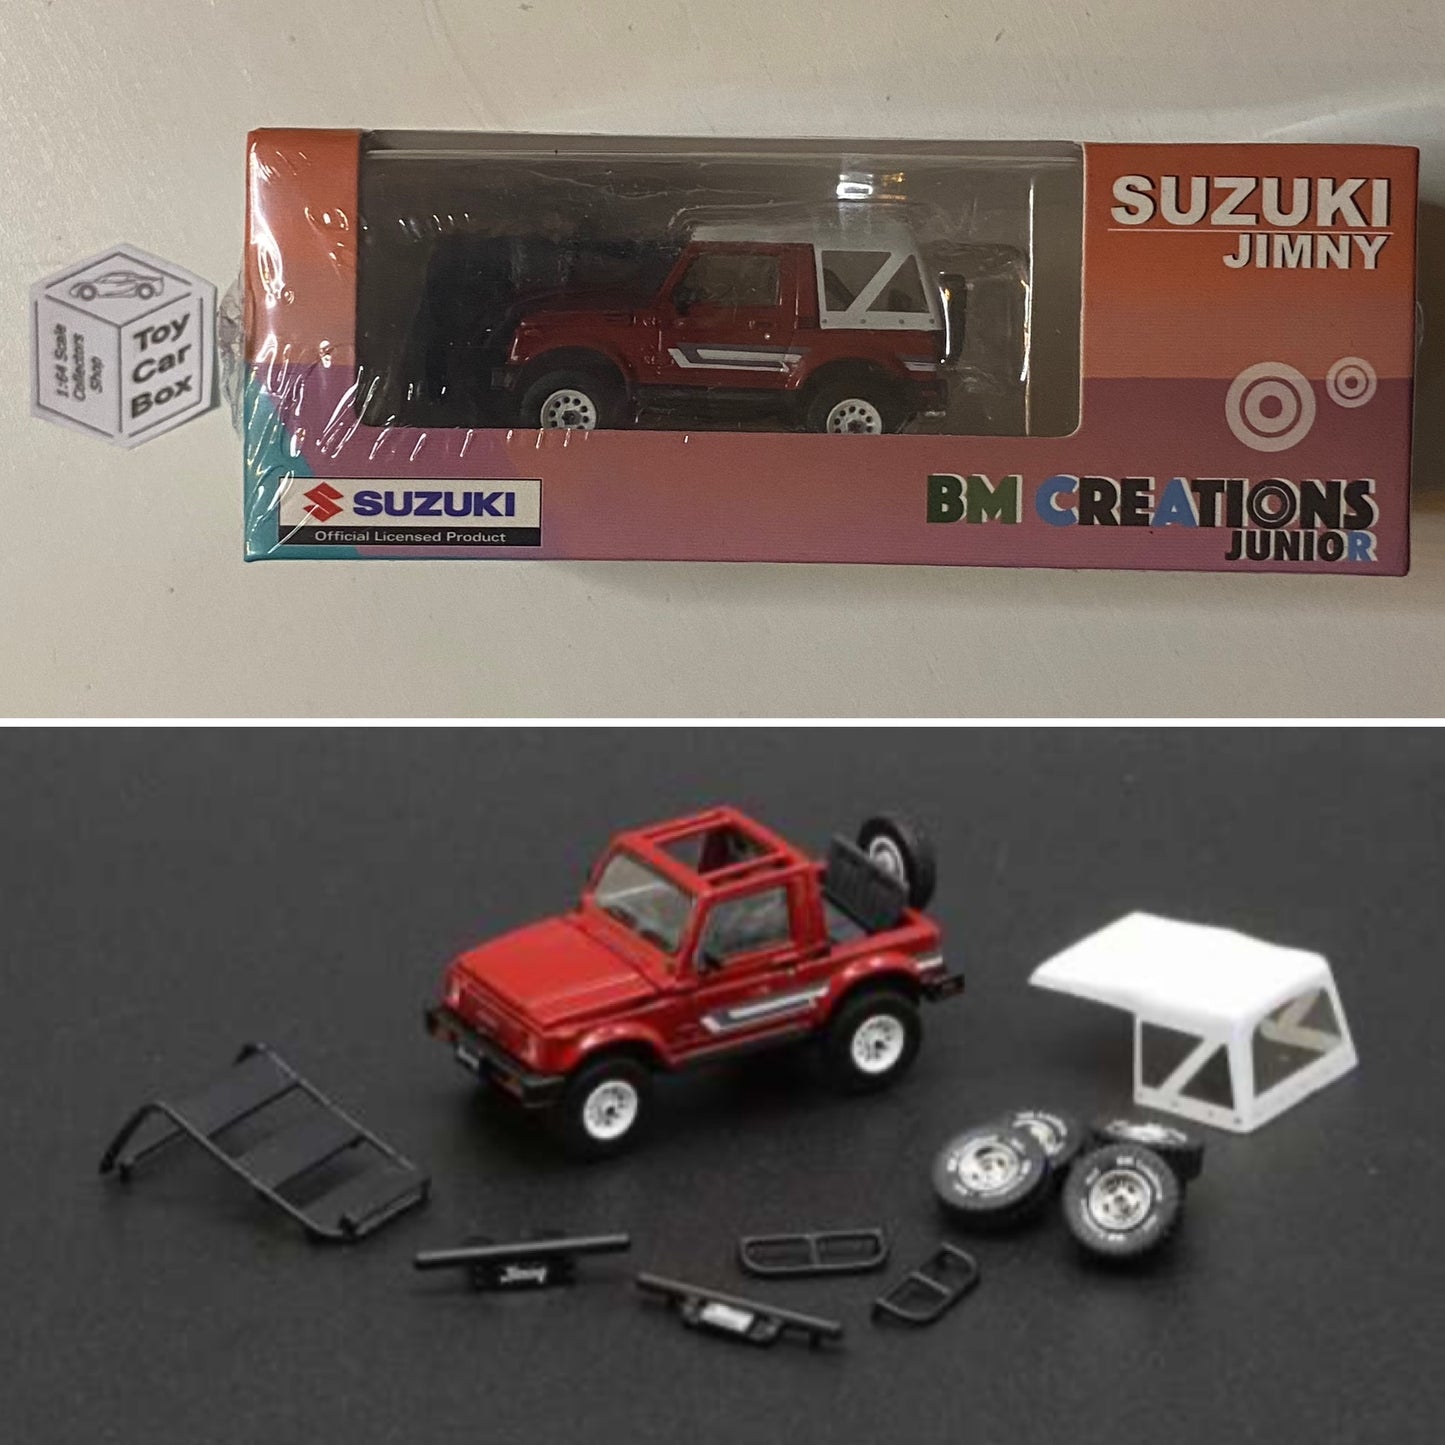 BM CREATIONS - Suzuki Jimny SJ413 (1:64 Scale - Red - RHD) M27g